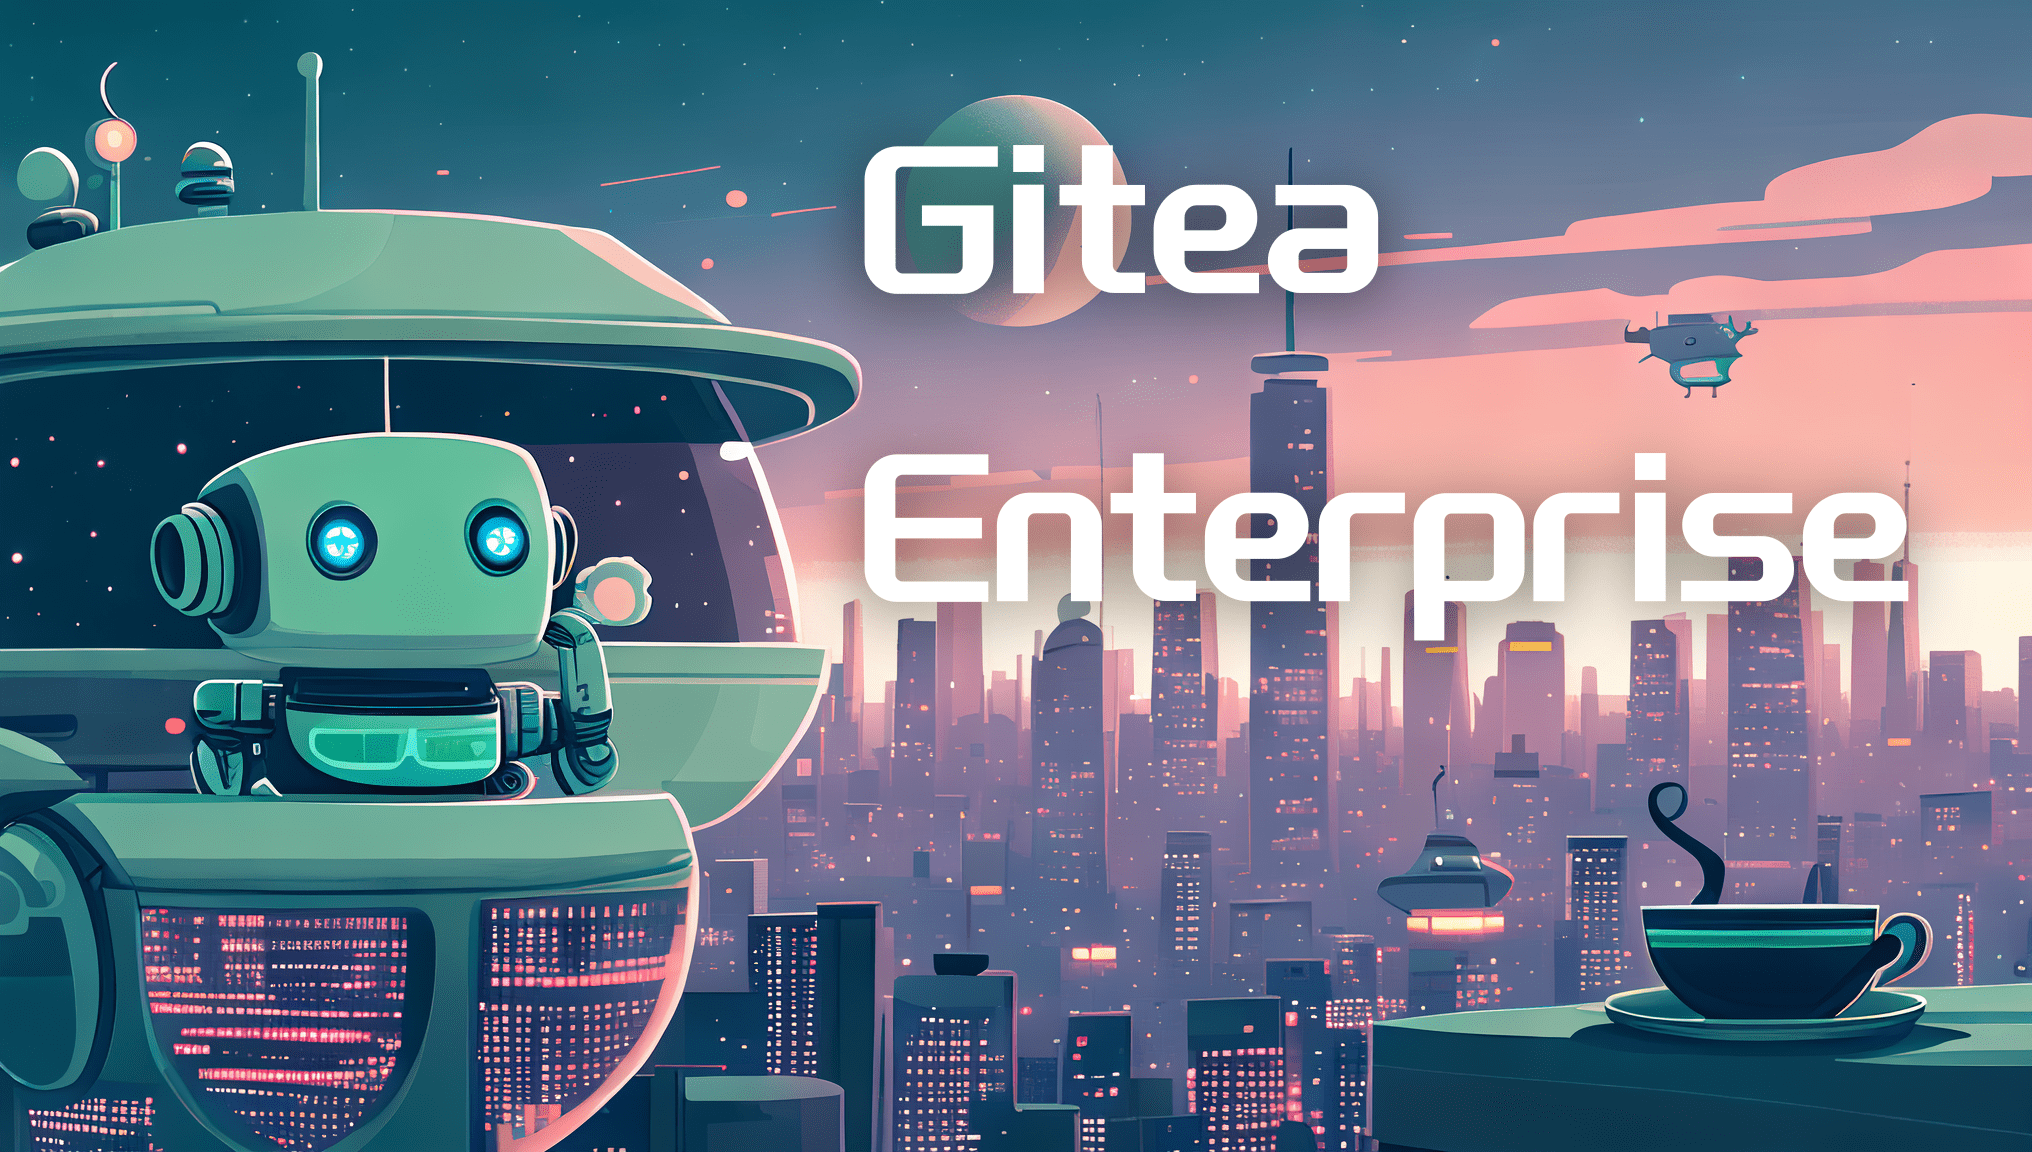 Banner for blog post with title "CommitGo Launches Gitea Enterprise"